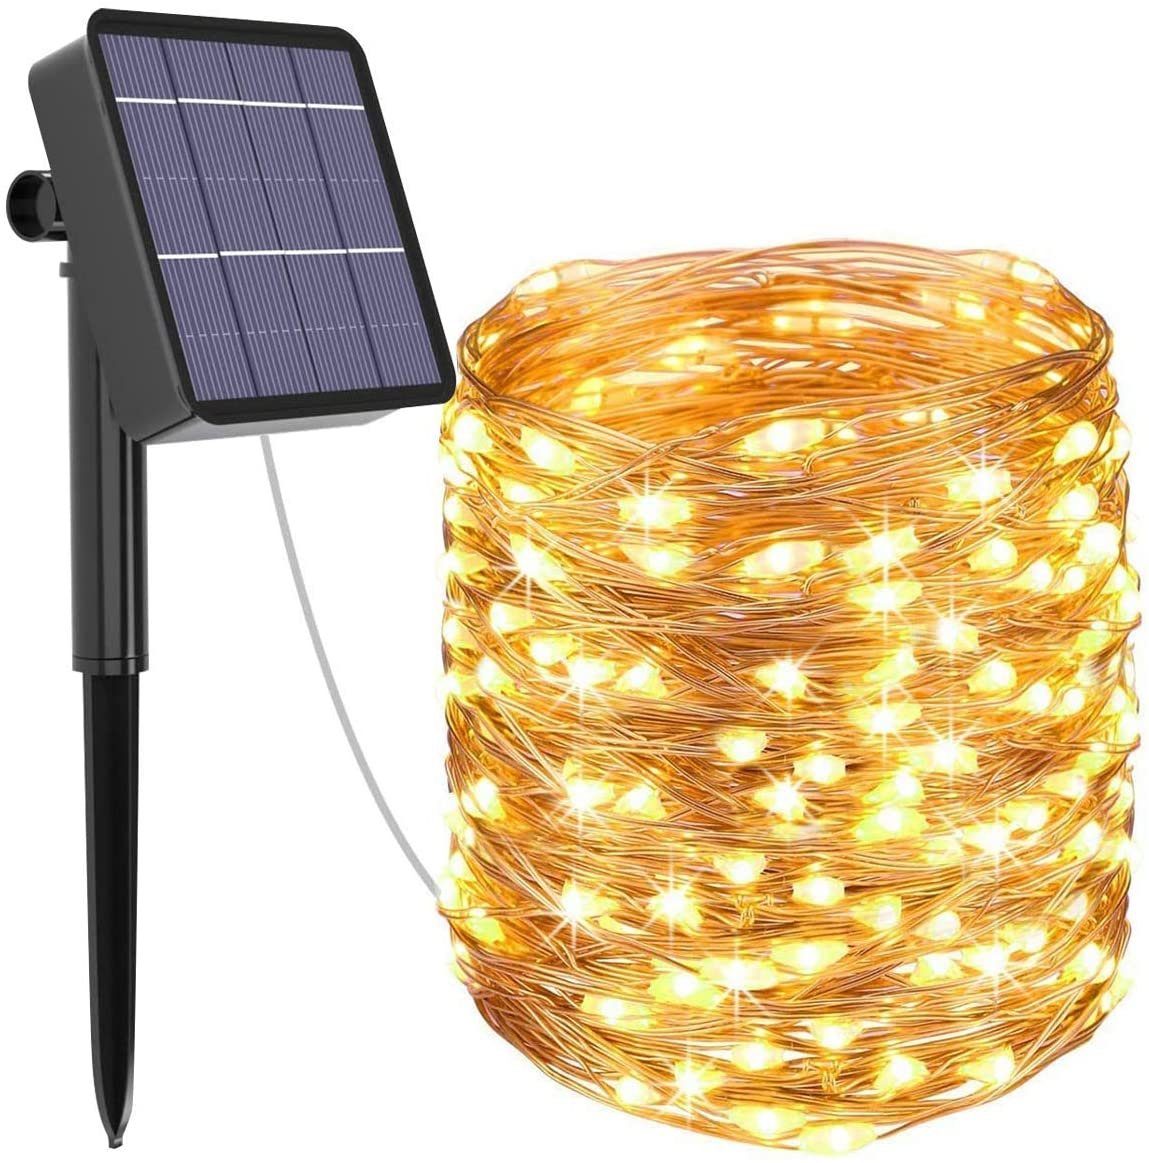 LETGOSPT LED-Lichterkette 12M 100LEDs / 22M 200LEDS LED Solarleuchte Kupferdraht Lichterkette, Wasserdicht IP65 PVC-Draht Beleuchtung Dekoration Warmweiß | Lichterketten